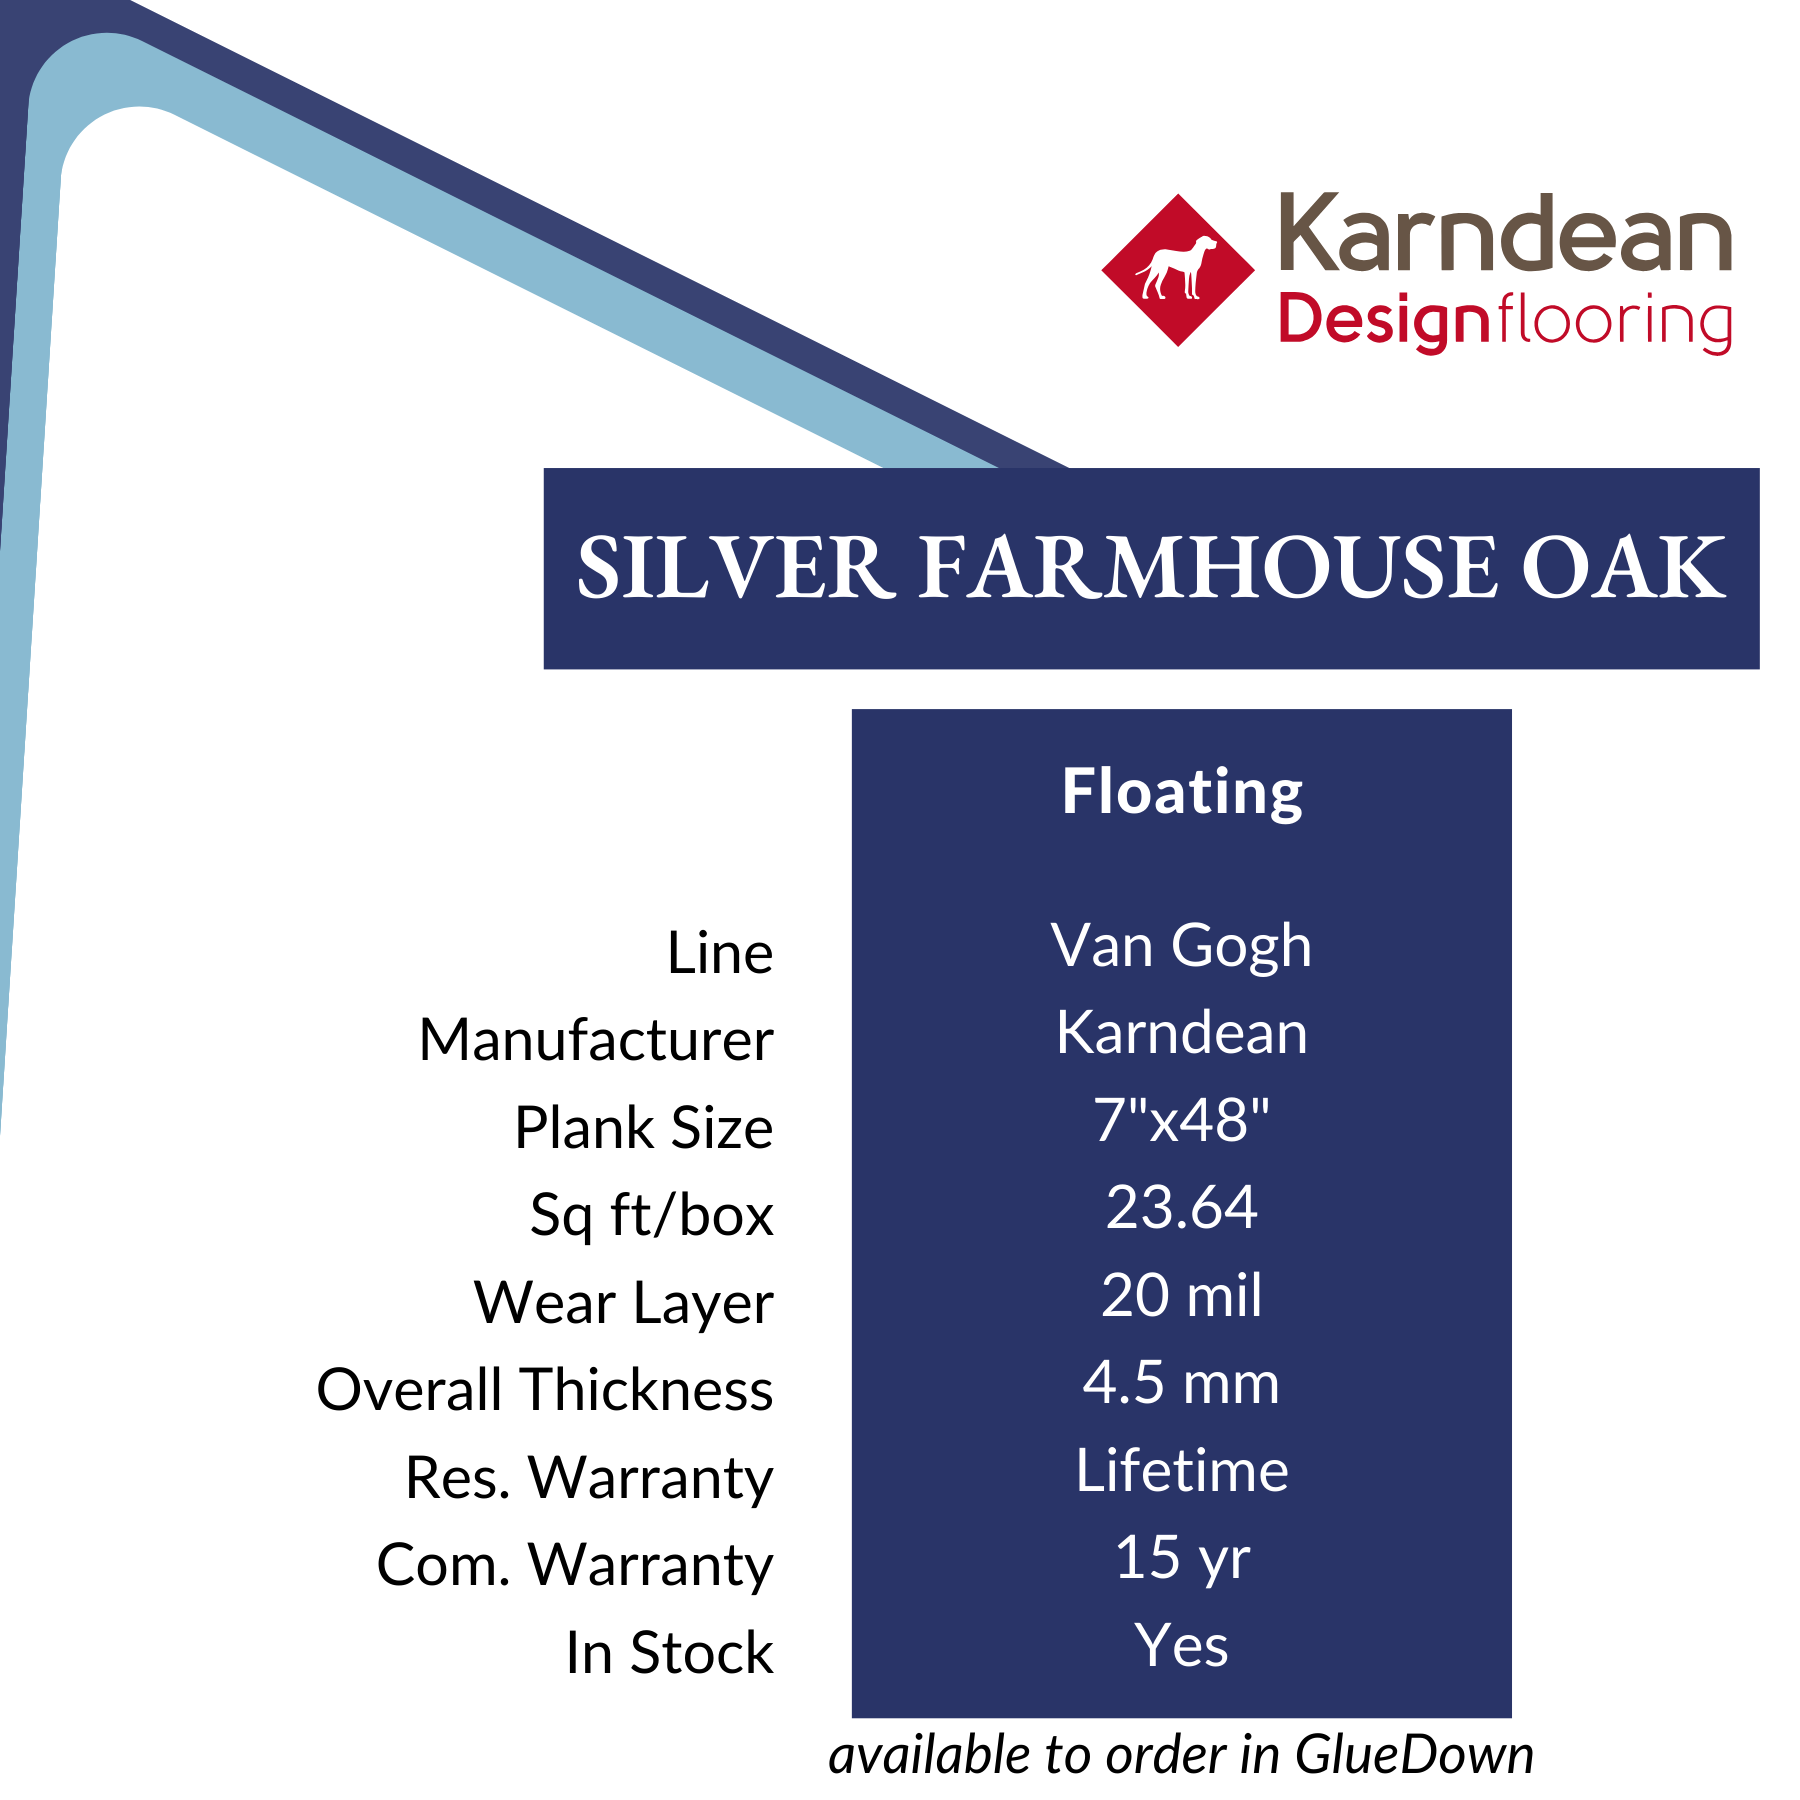 Silver Farmhouse Oak Luxury Vinyl Flooring from Karndean, sold at Calhoun’s, Springfield, IL Specs